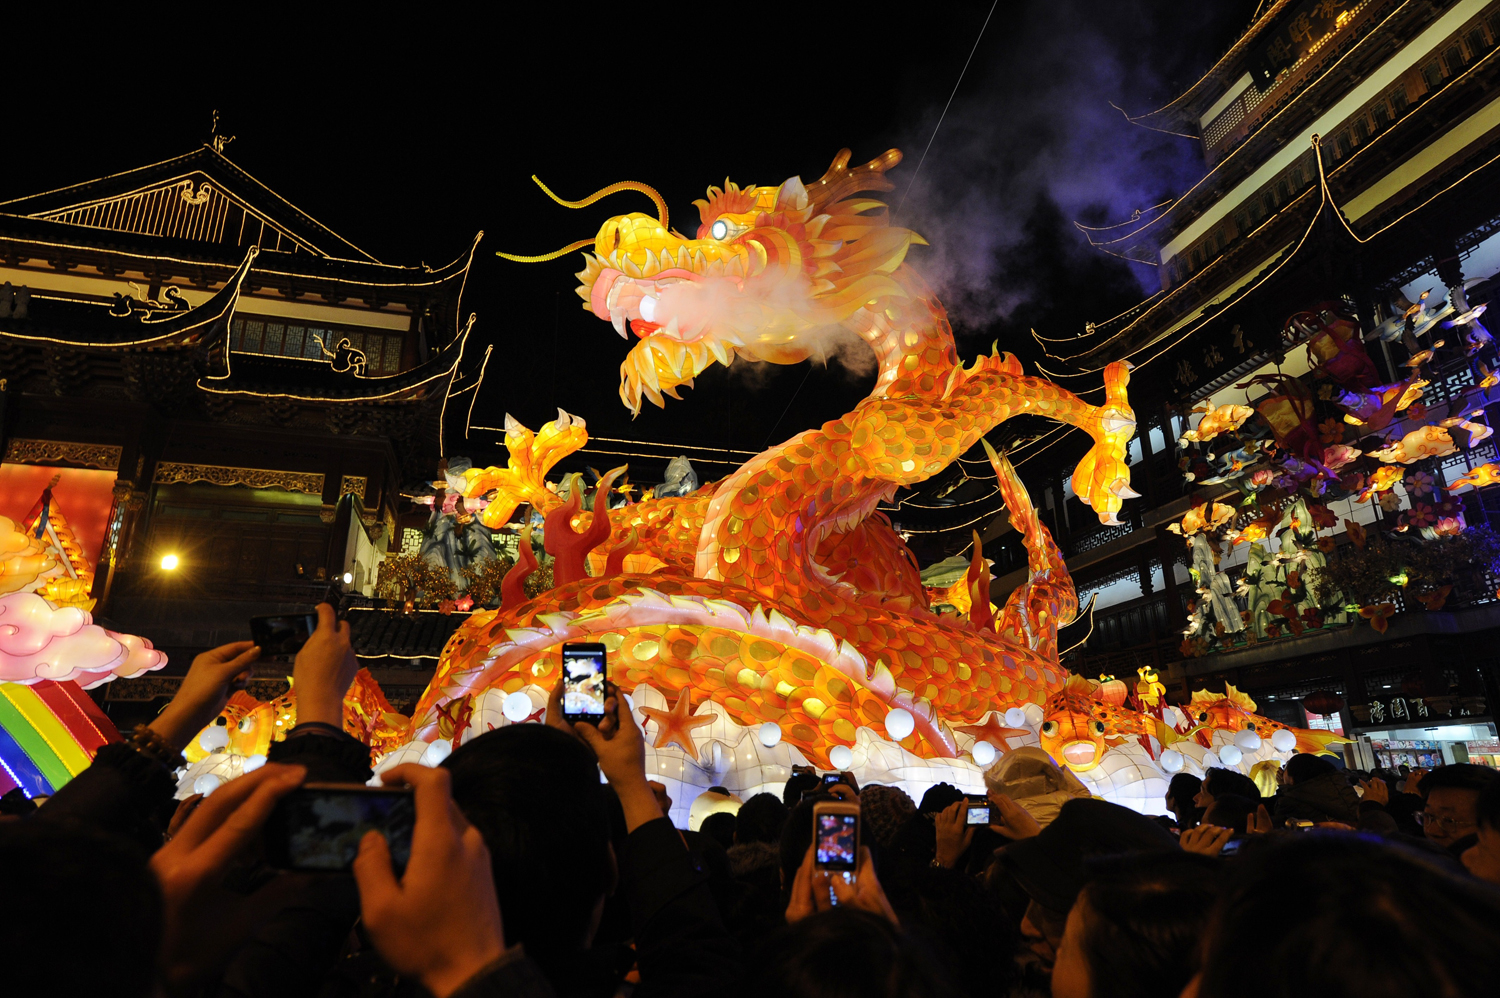 New years festival. Китайский новый год (Chinese New year). Новый год в Китае. Праздник дракона в Китае. Китайский новый год дракон.